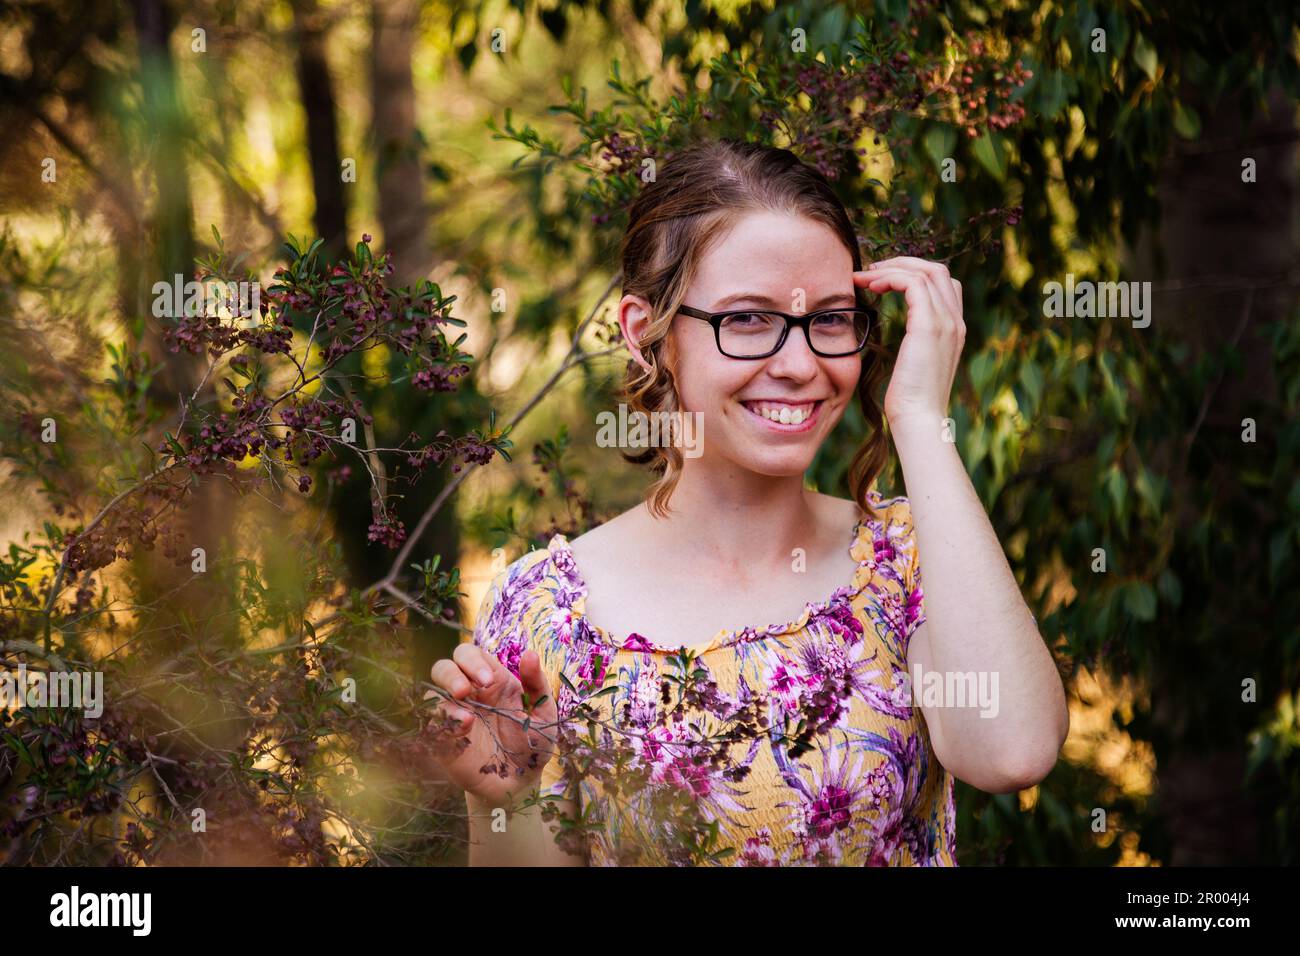 Girl with glasses in australian bush setting smiling at camera Stock Photo